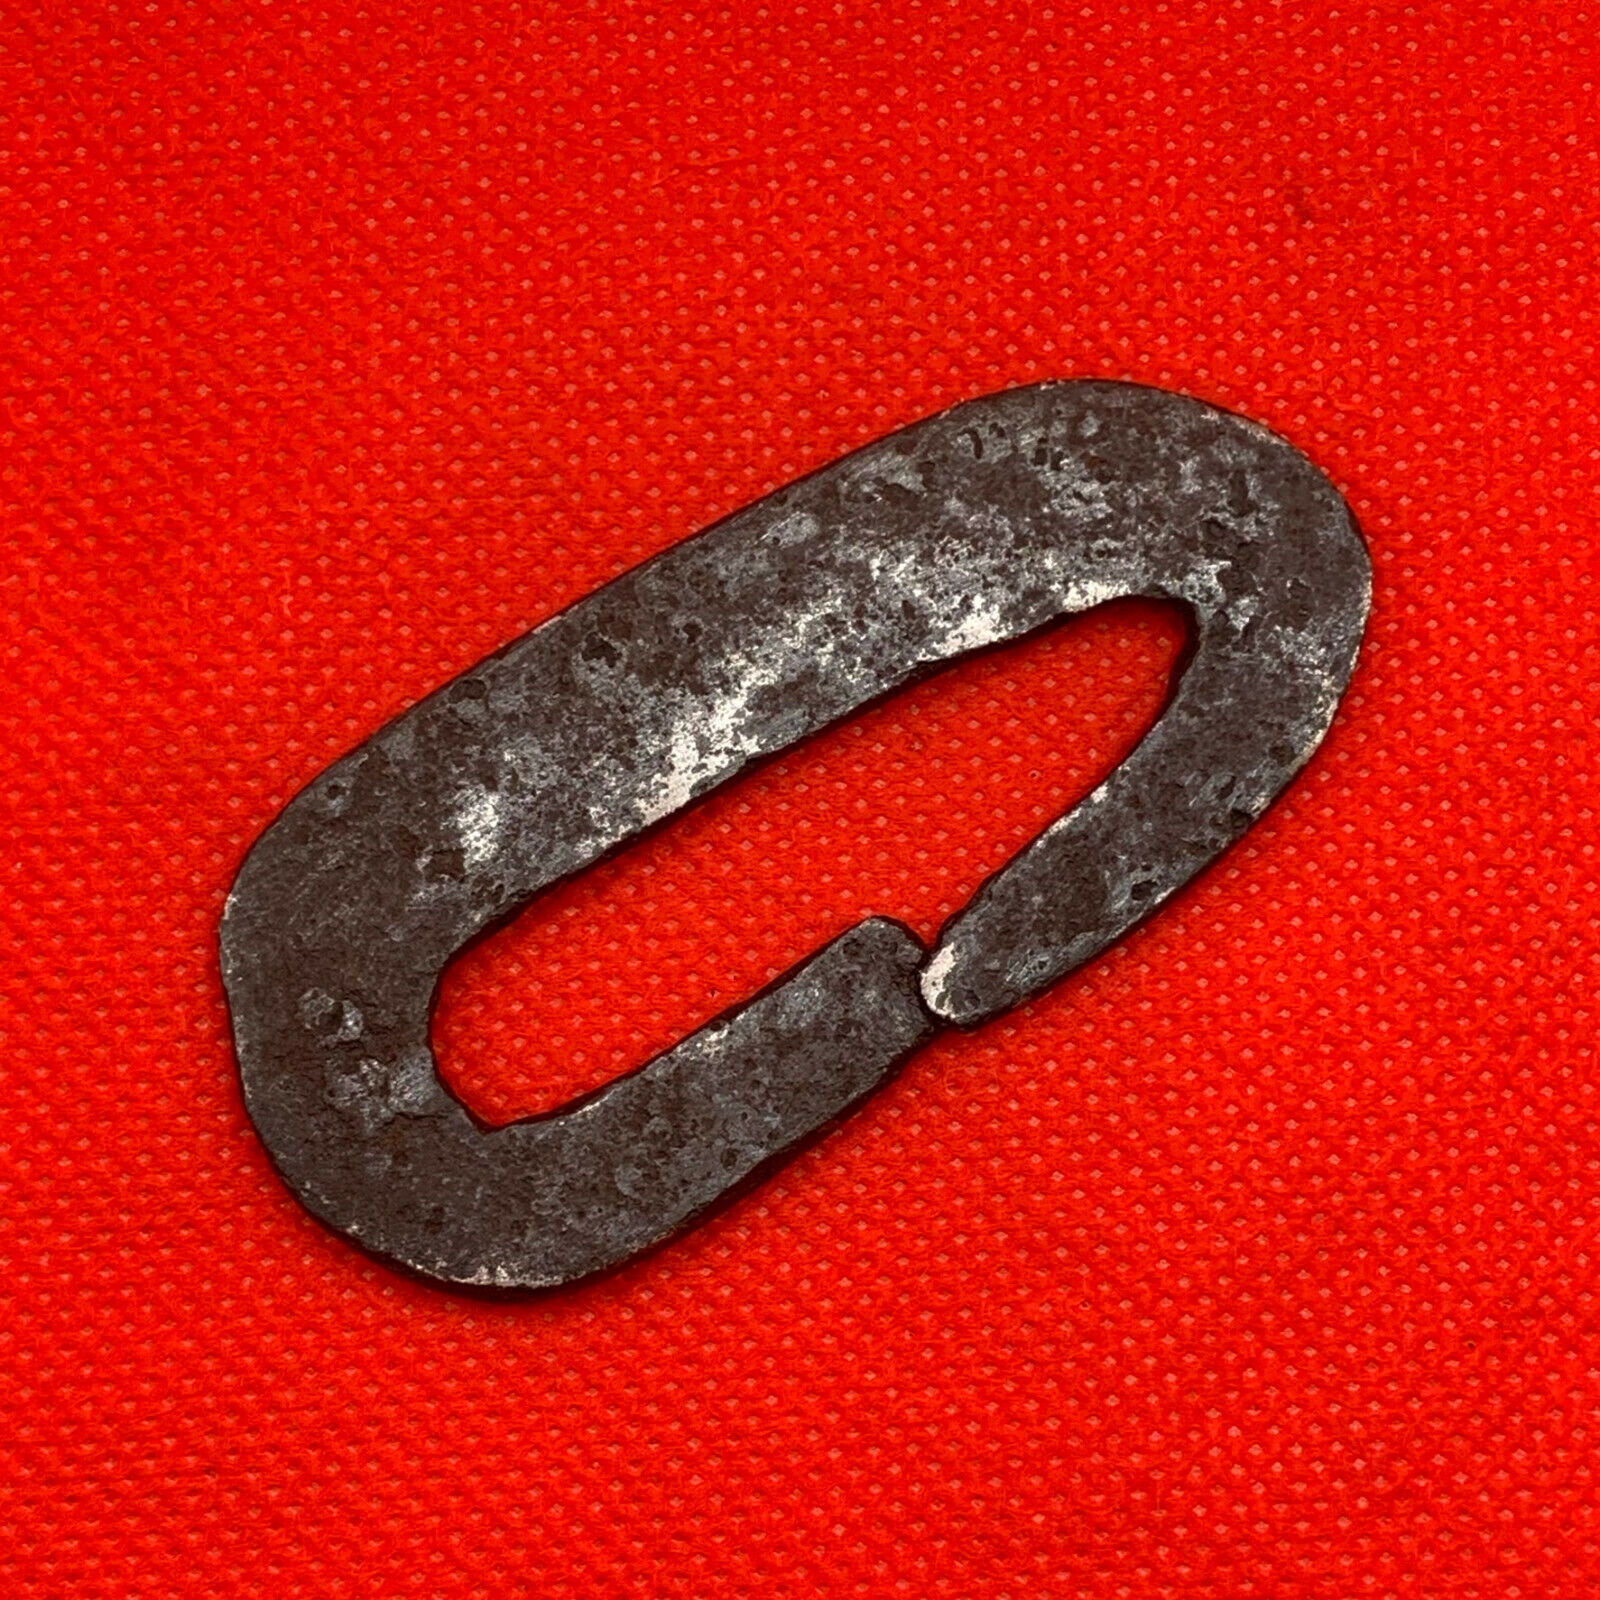 Rare Antique Ancient Iron Iguard or tsuba from the sword